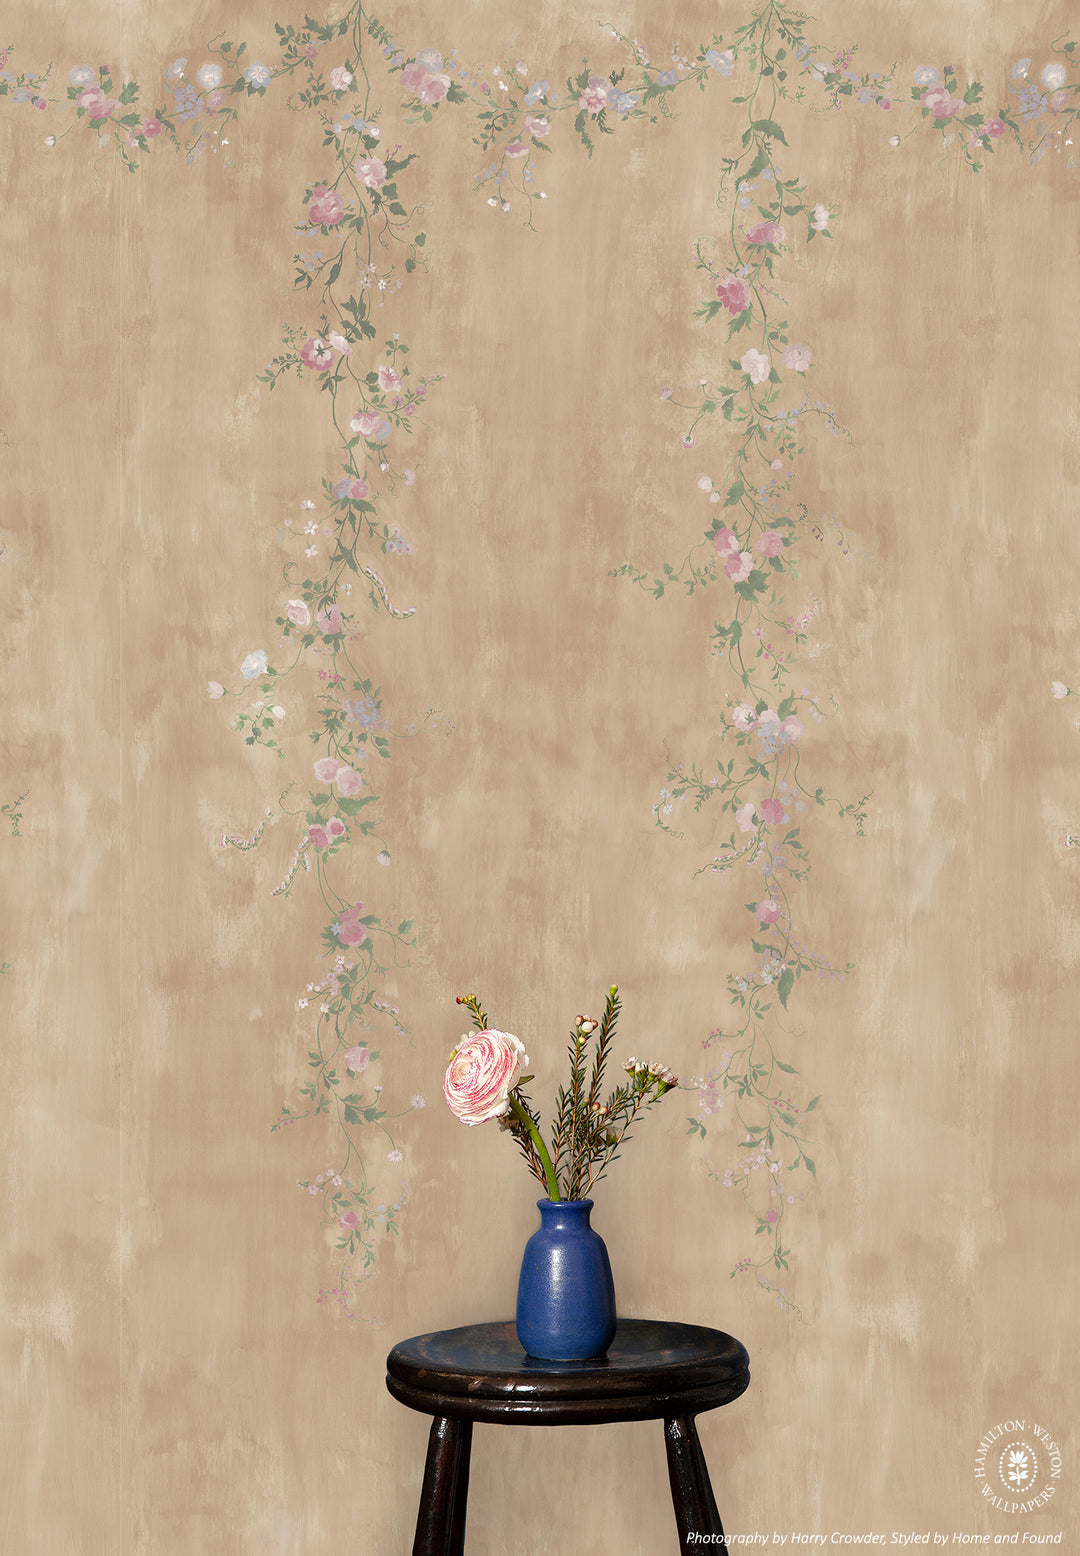 Floral-Roberts-Hamilton-Weston-wallpaper-trailing-flowers-Garland-hand-illustrated-panel-walls-mural-floral-Garland-painterly-sienna-02